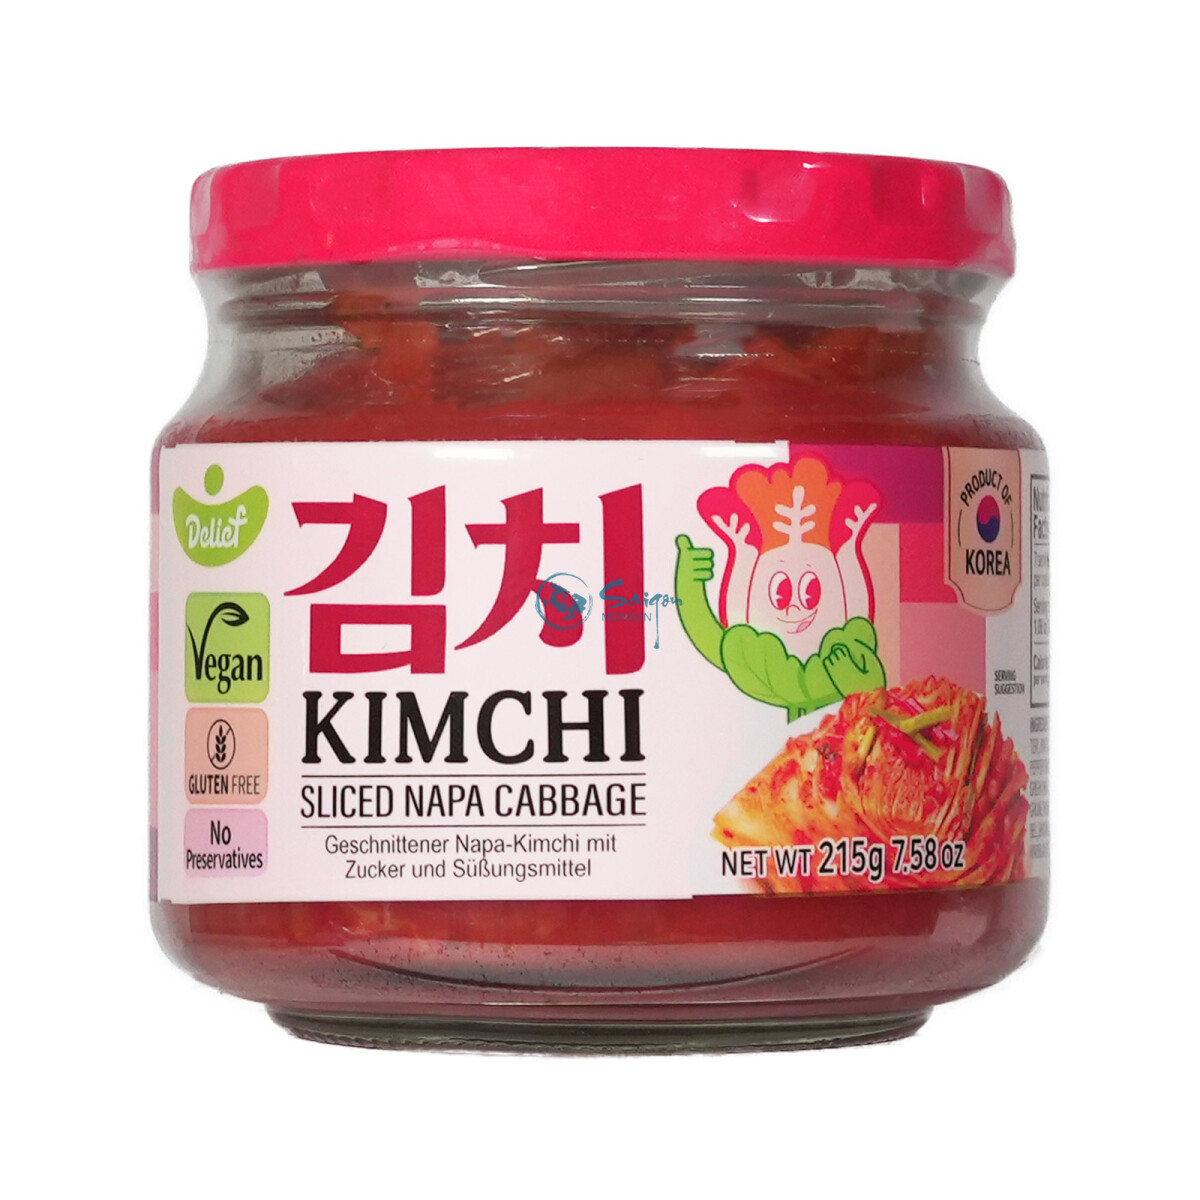 Delief Napa Kimchi 215g vegan & glutenfrei